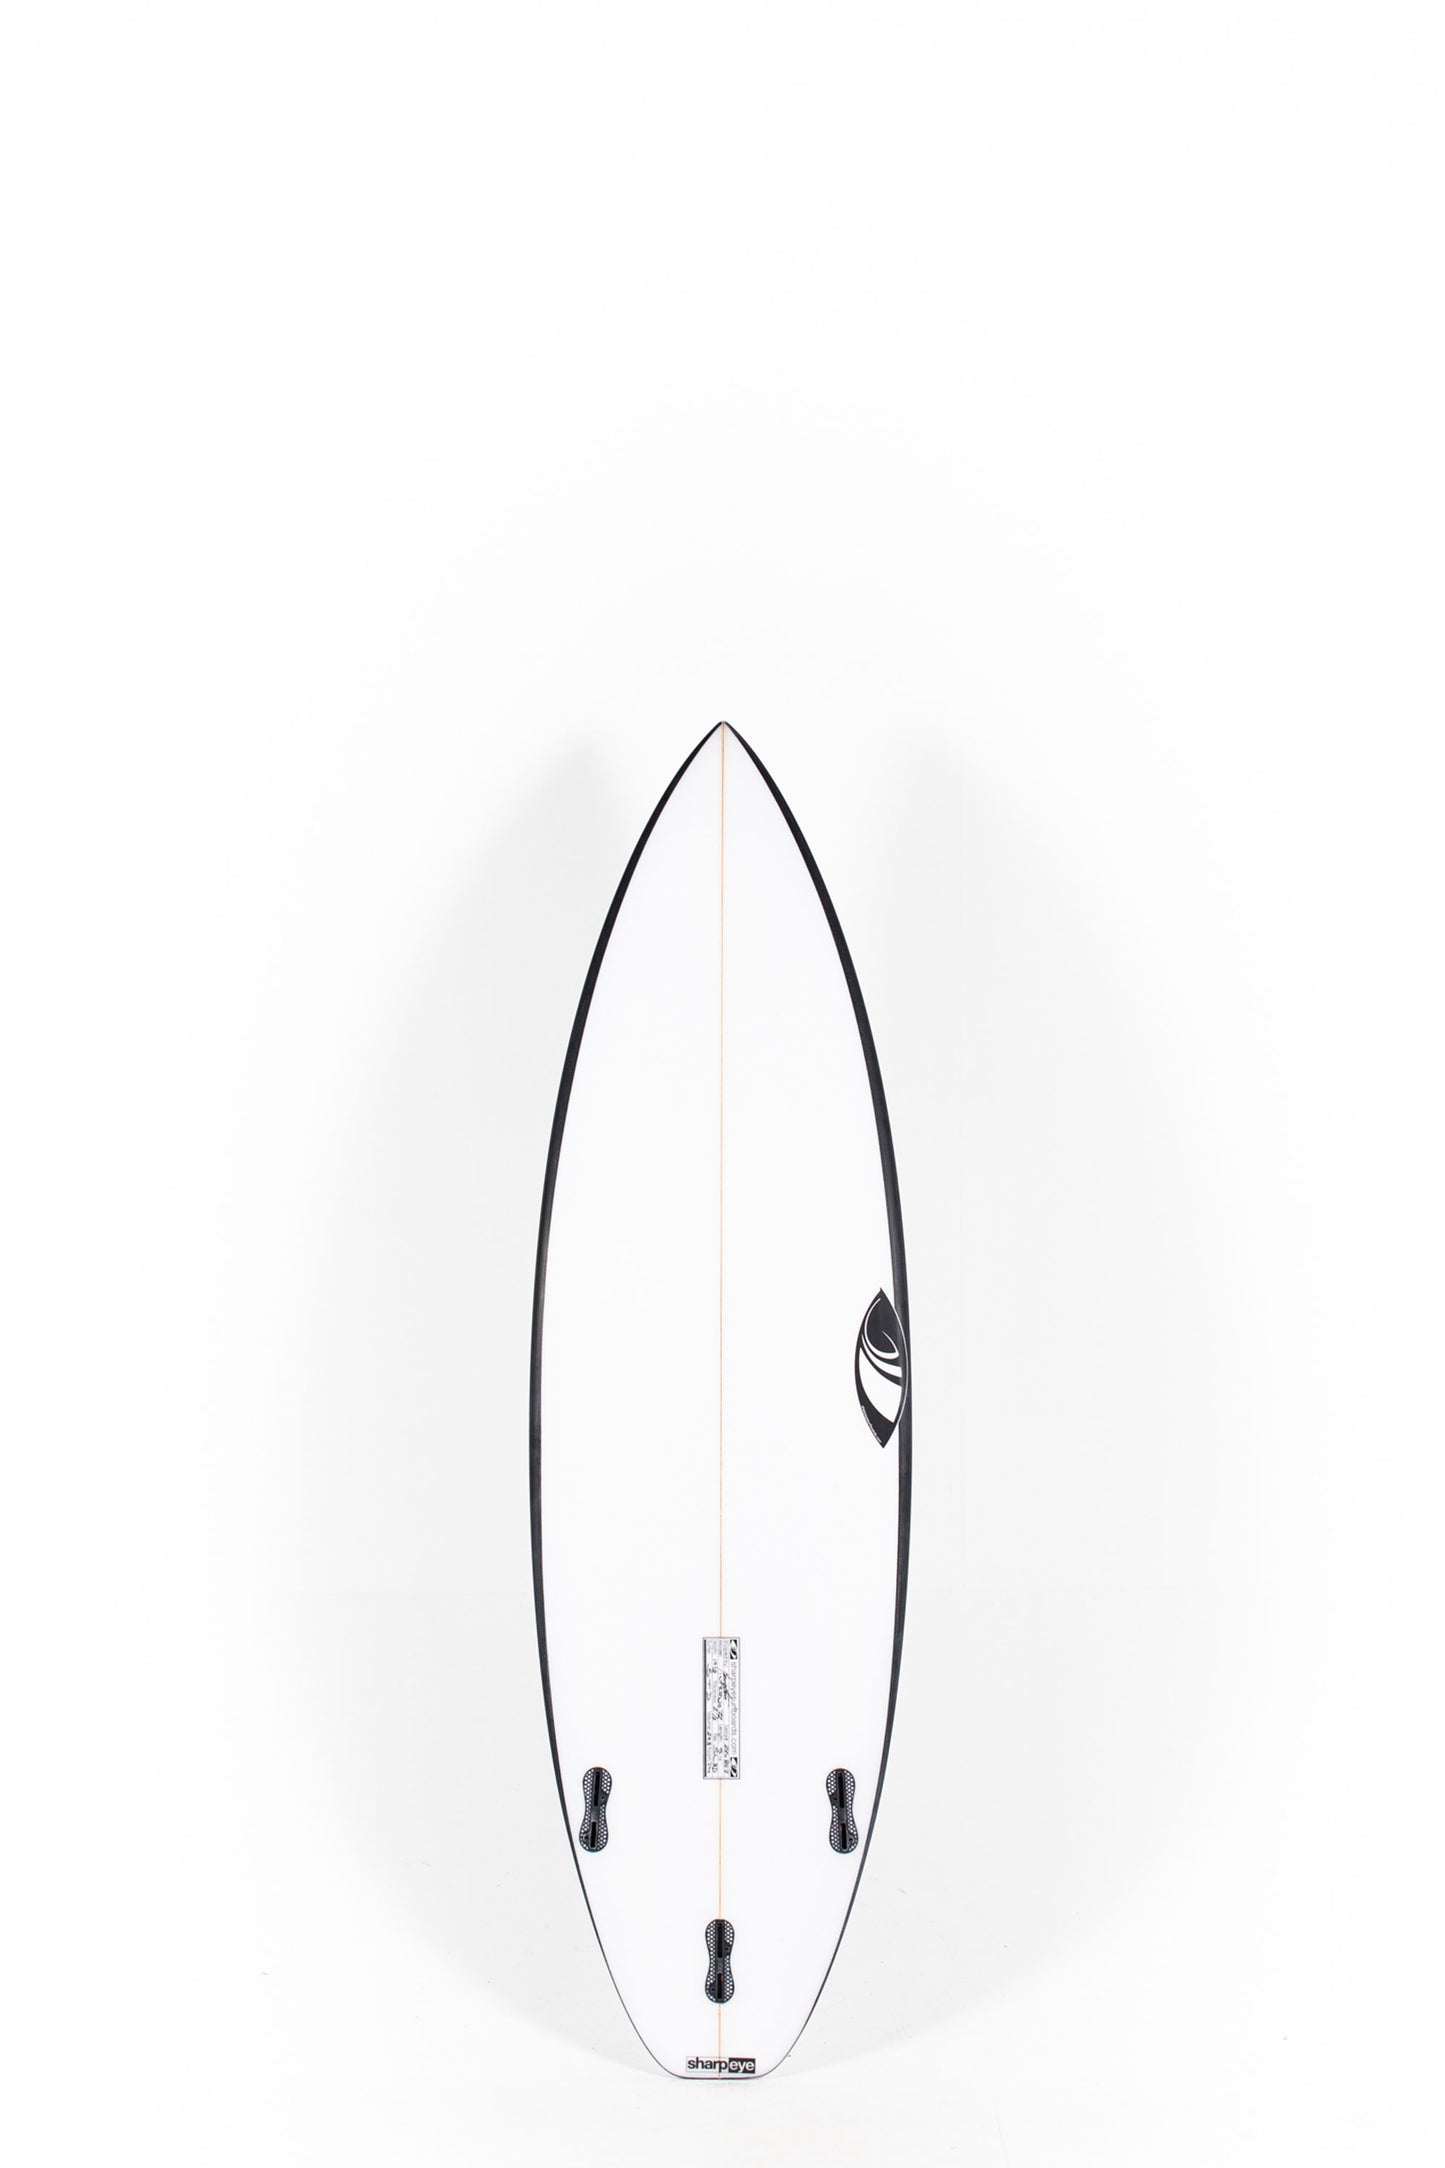 Sharp Eye Surfboards - INFERNO 72 by Marcio Zouvi 5'11